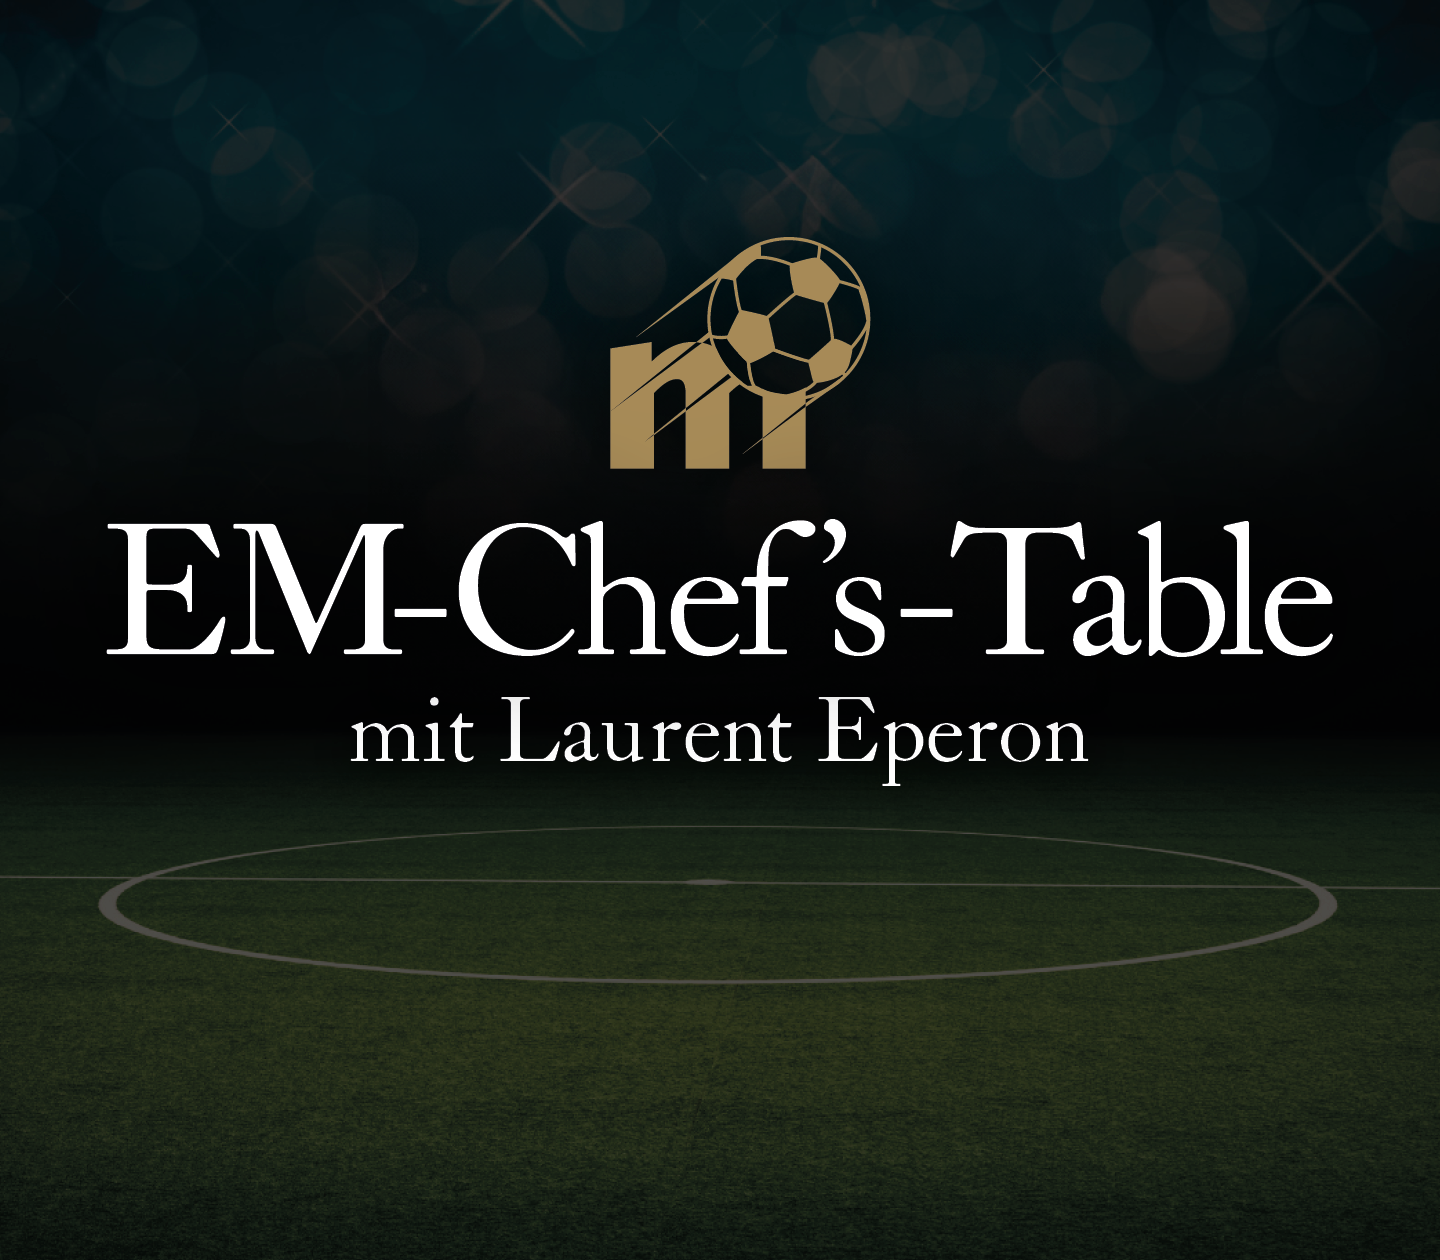 EM-Chef's-Table   HALBFINAL